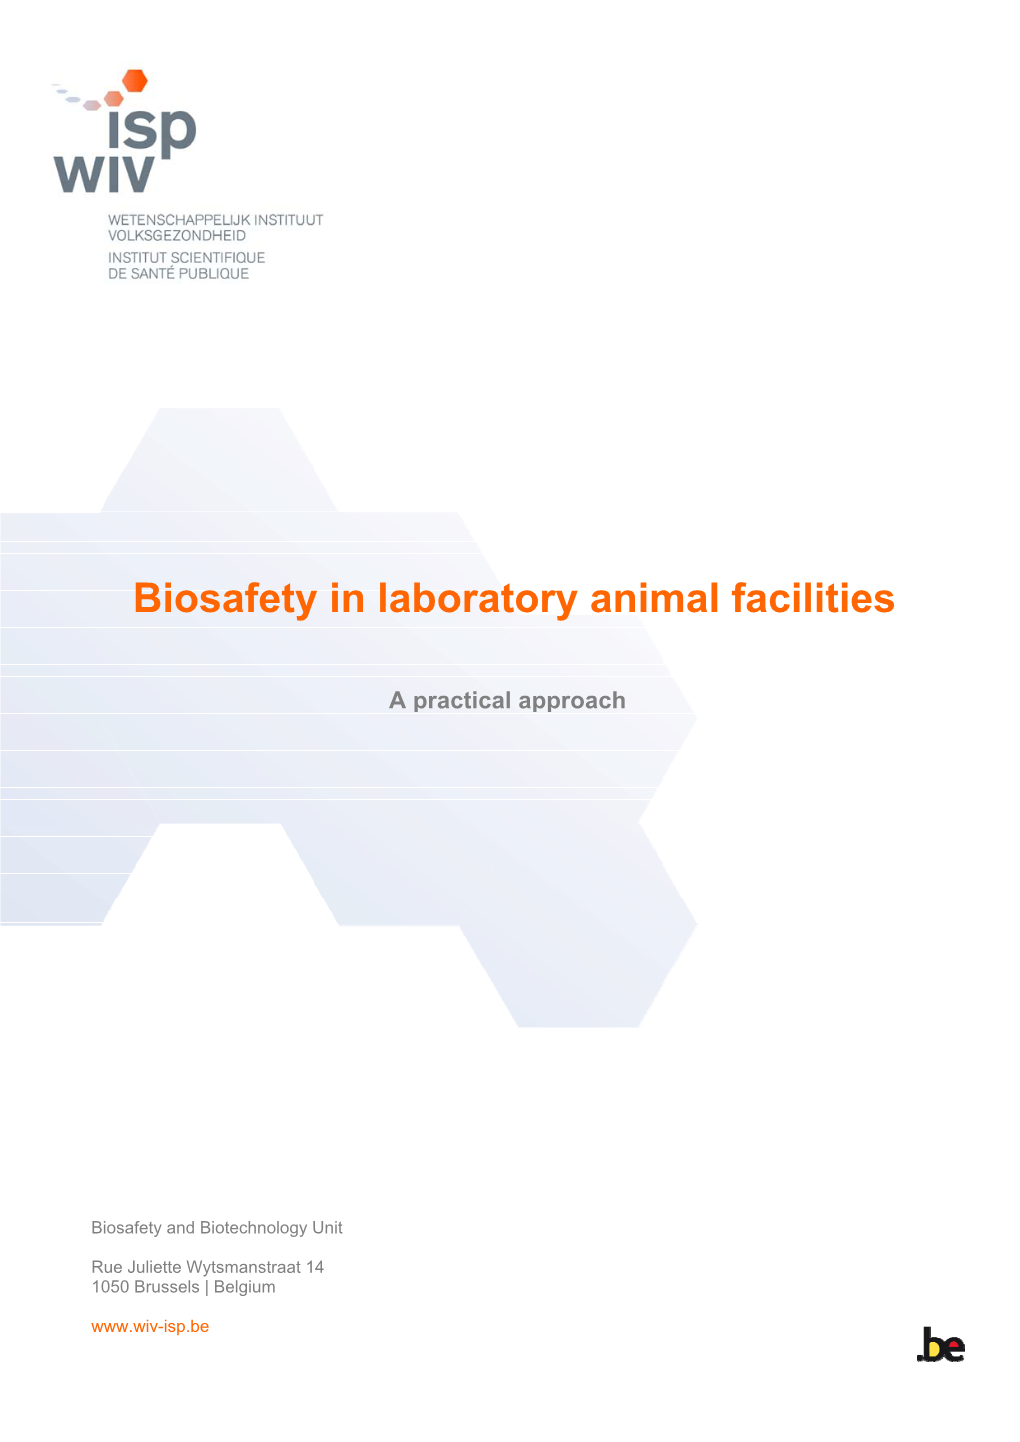 Biosafety in Laboratory Animal Facilities